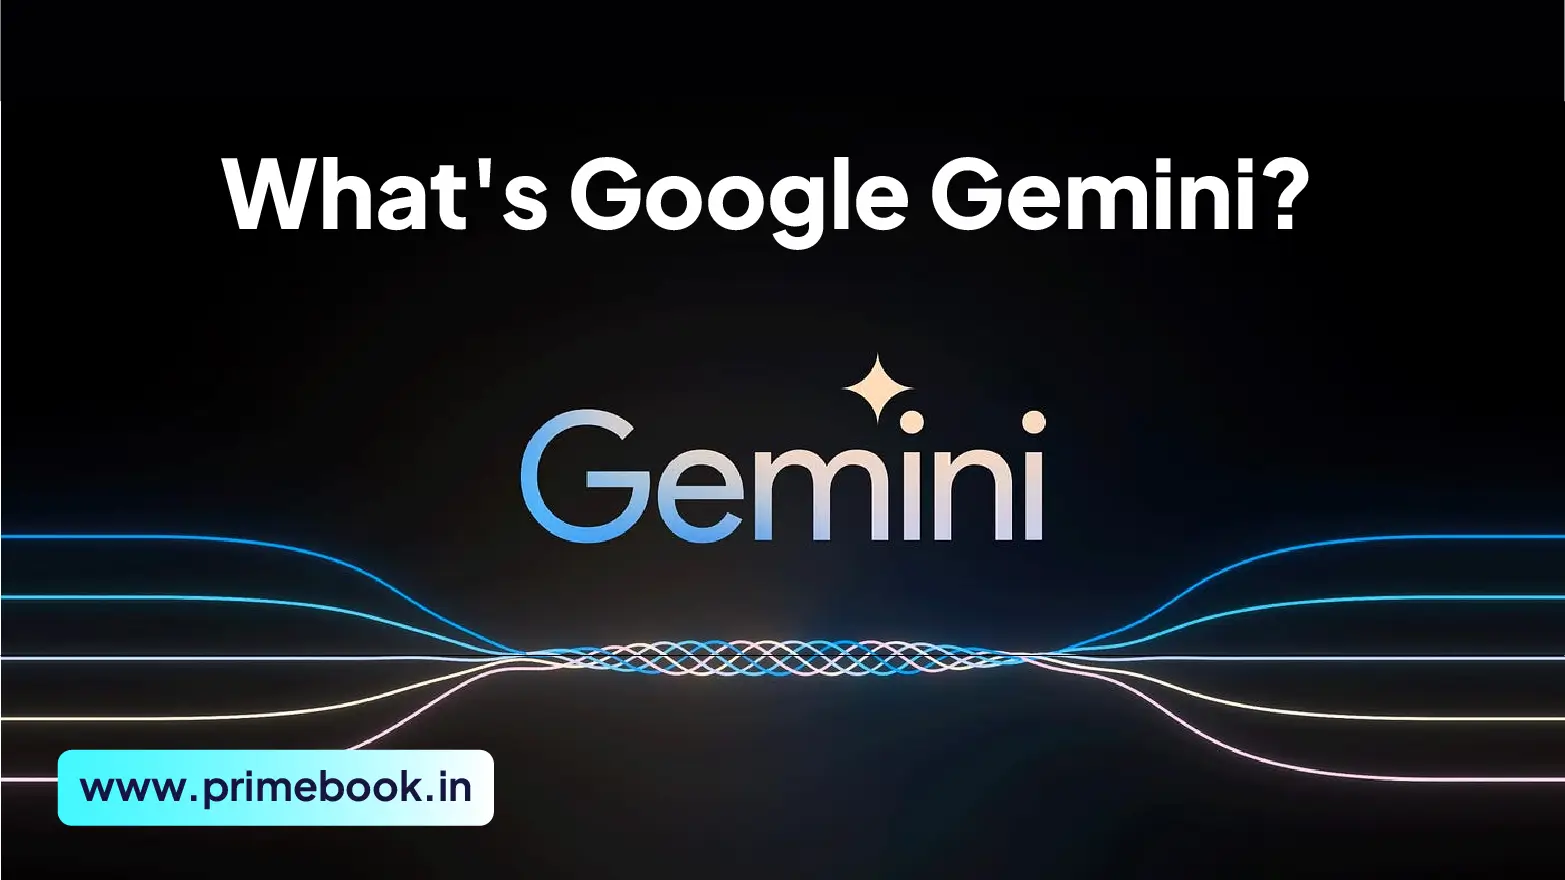 Google Gemini: Google's Most Advanced AI Model